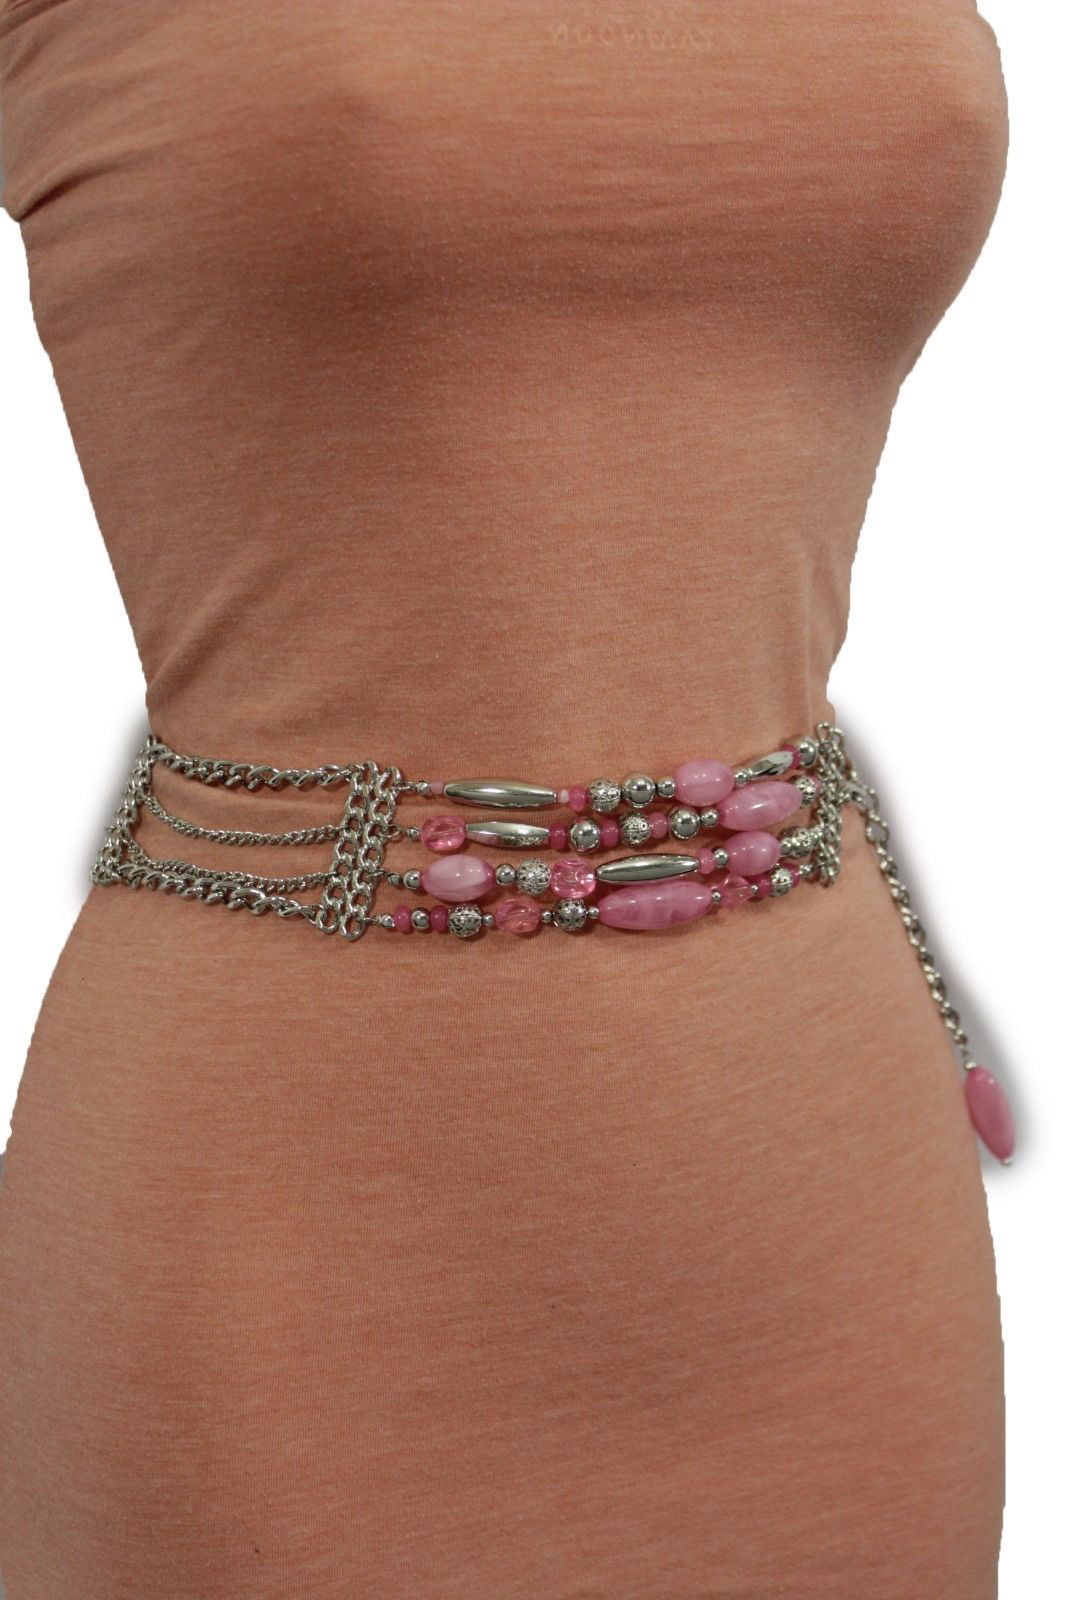 Women Belt Hip Waist Silver Metal Chains Long Pink Bead Charms Fashion